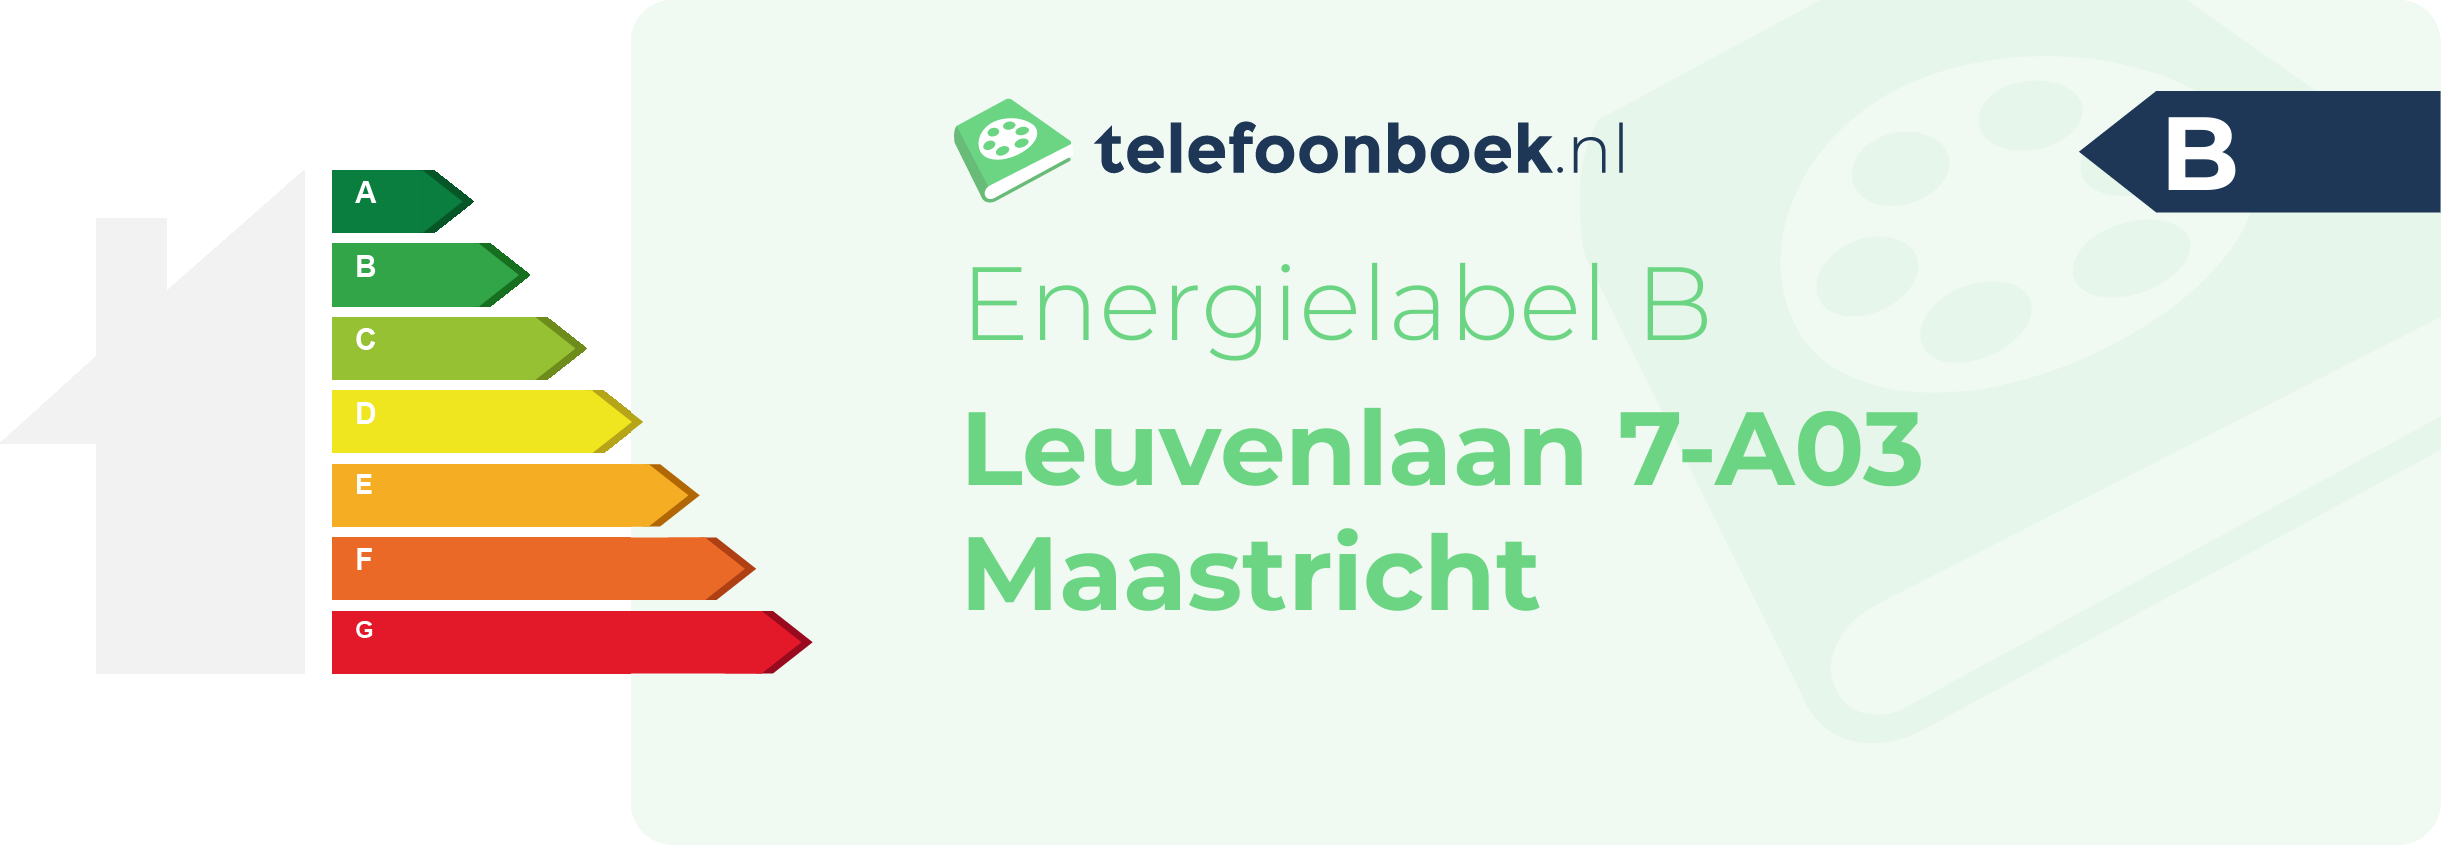 Energielabel Leuvenlaan 7-A03 Maastricht